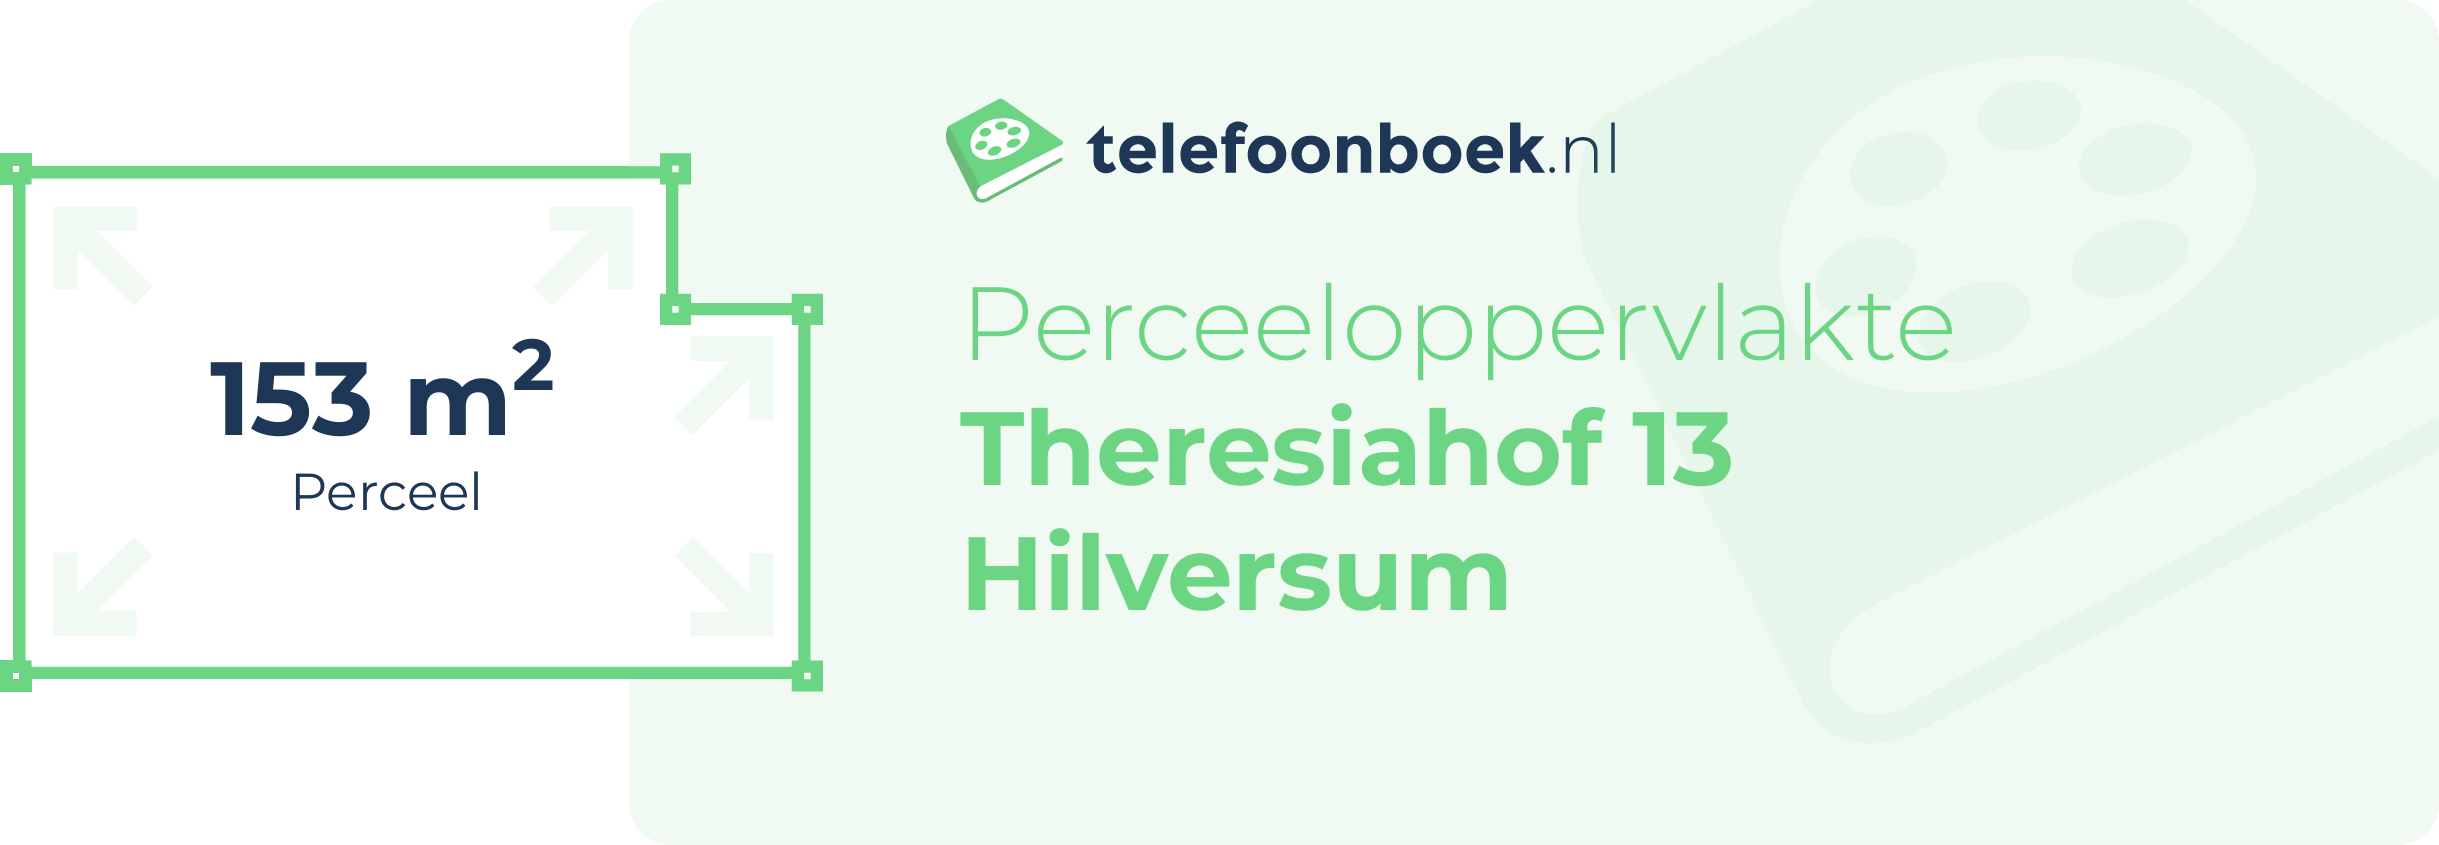 Perceeloppervlakte Theresiahof 13 Hilversum